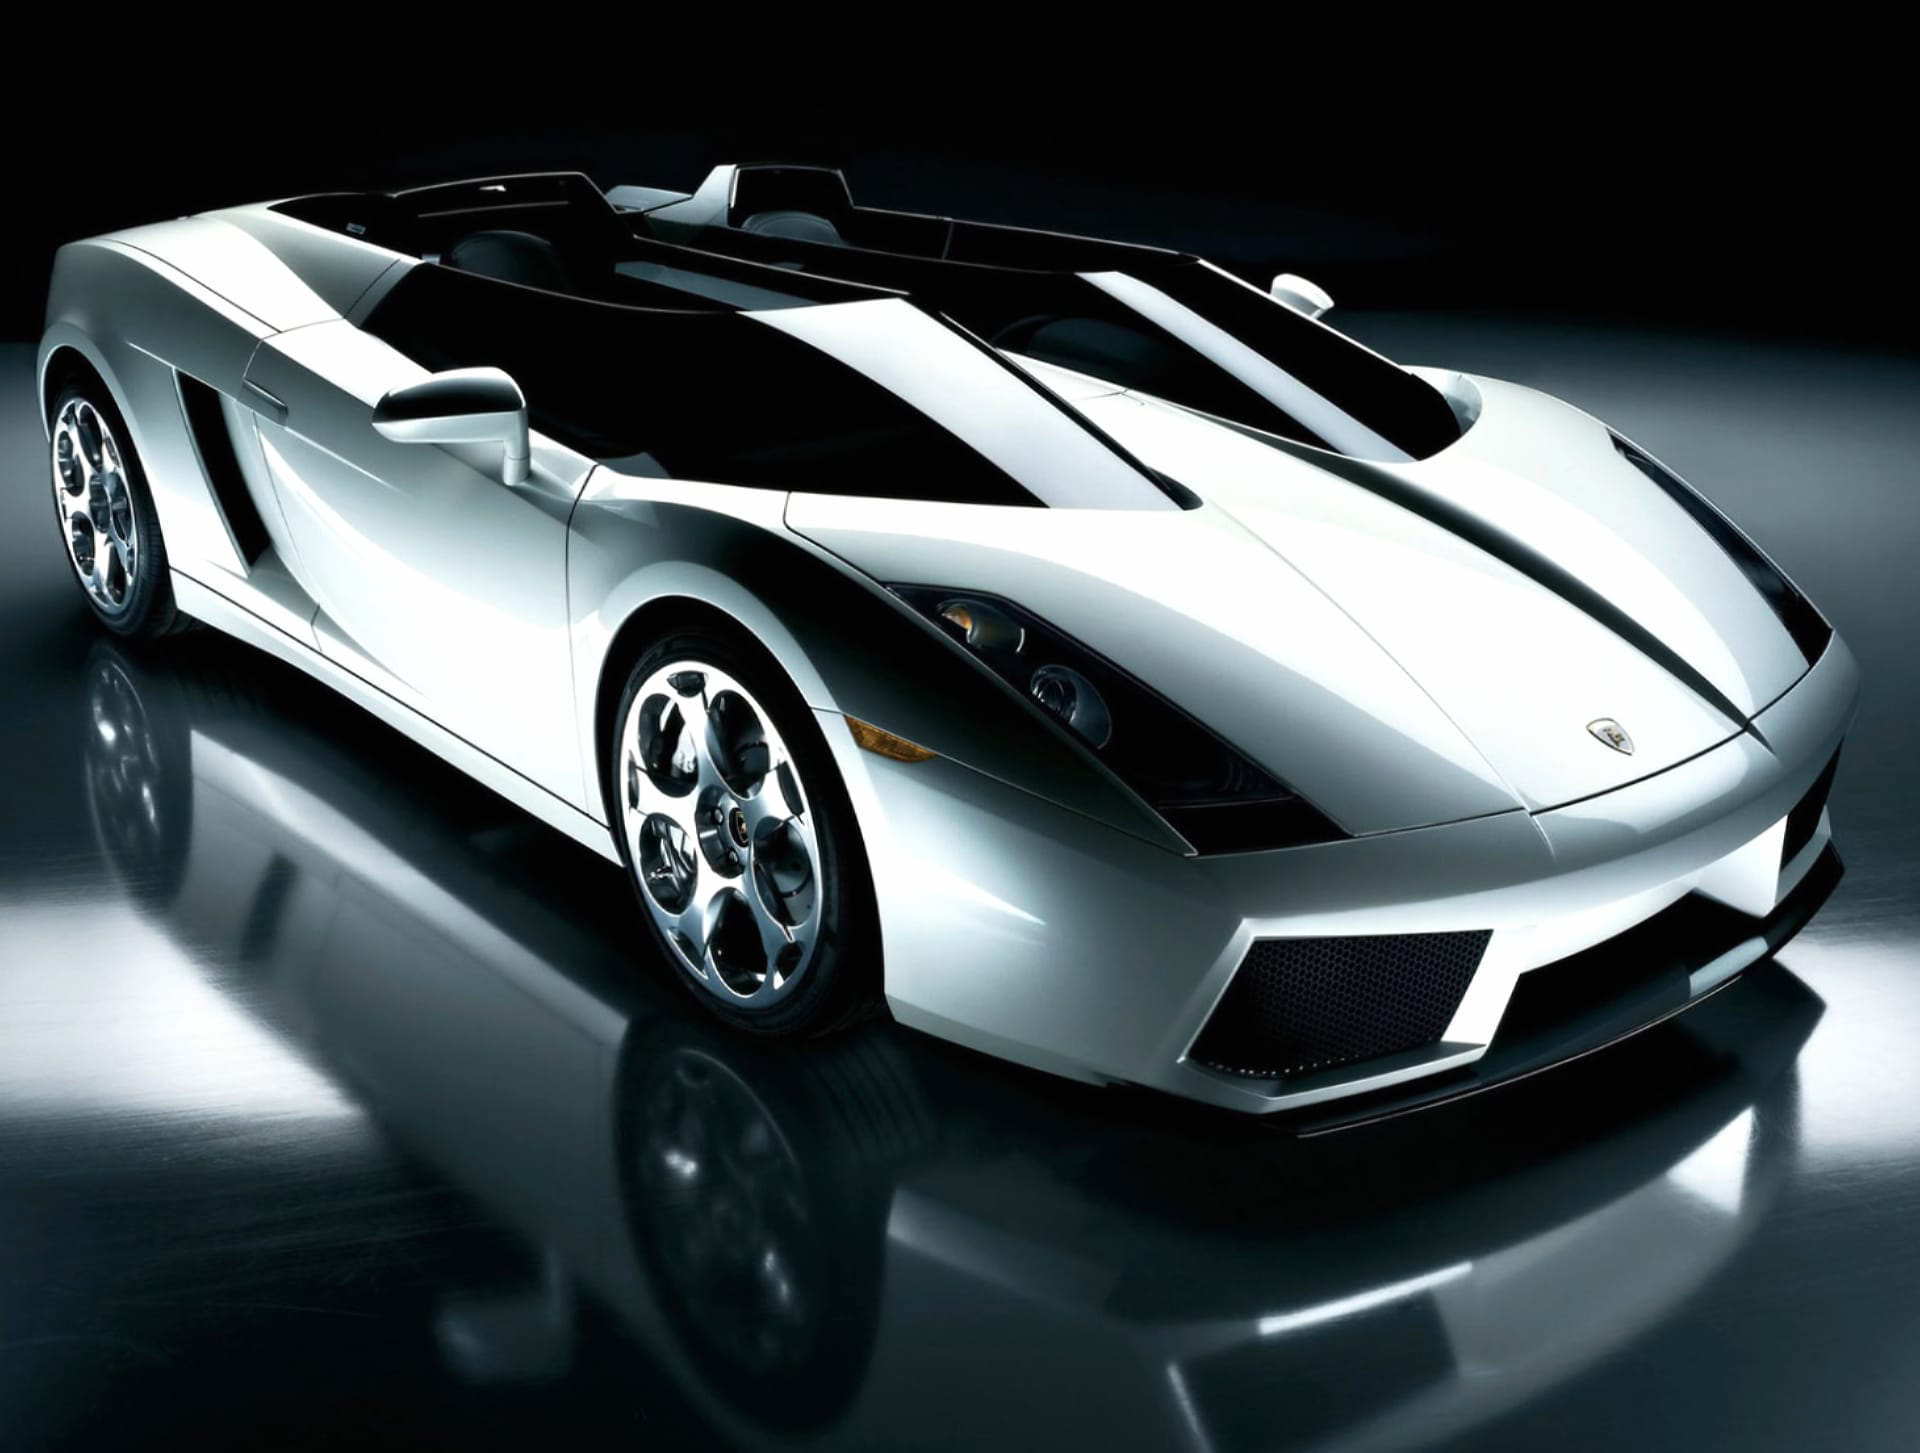 Lamborghini Concept S at 2048 x 2048 iPad size wallpapers HD quality